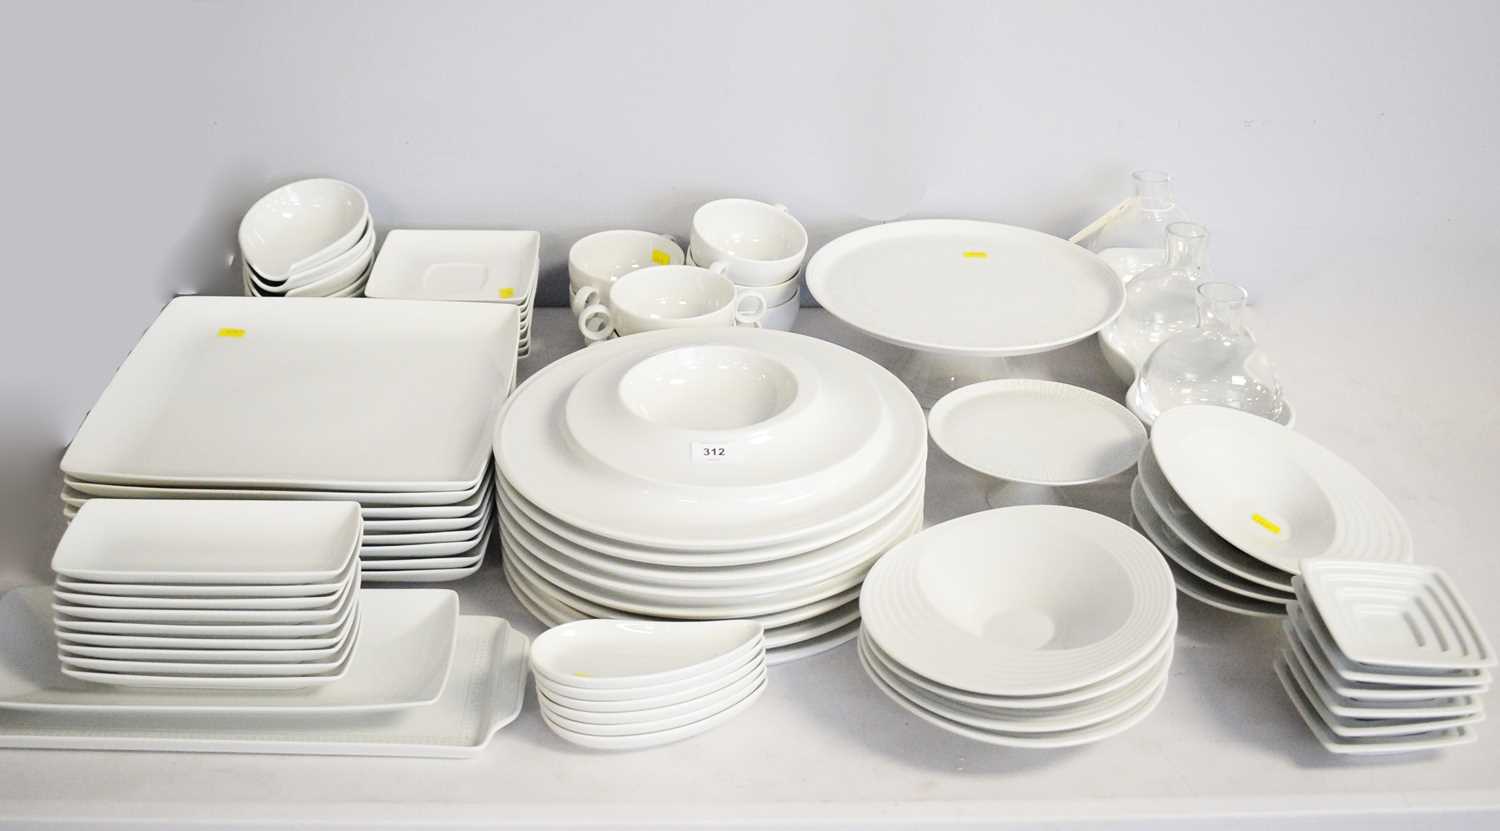 Lot 312 - Selection of Vista Alegre dinnerware